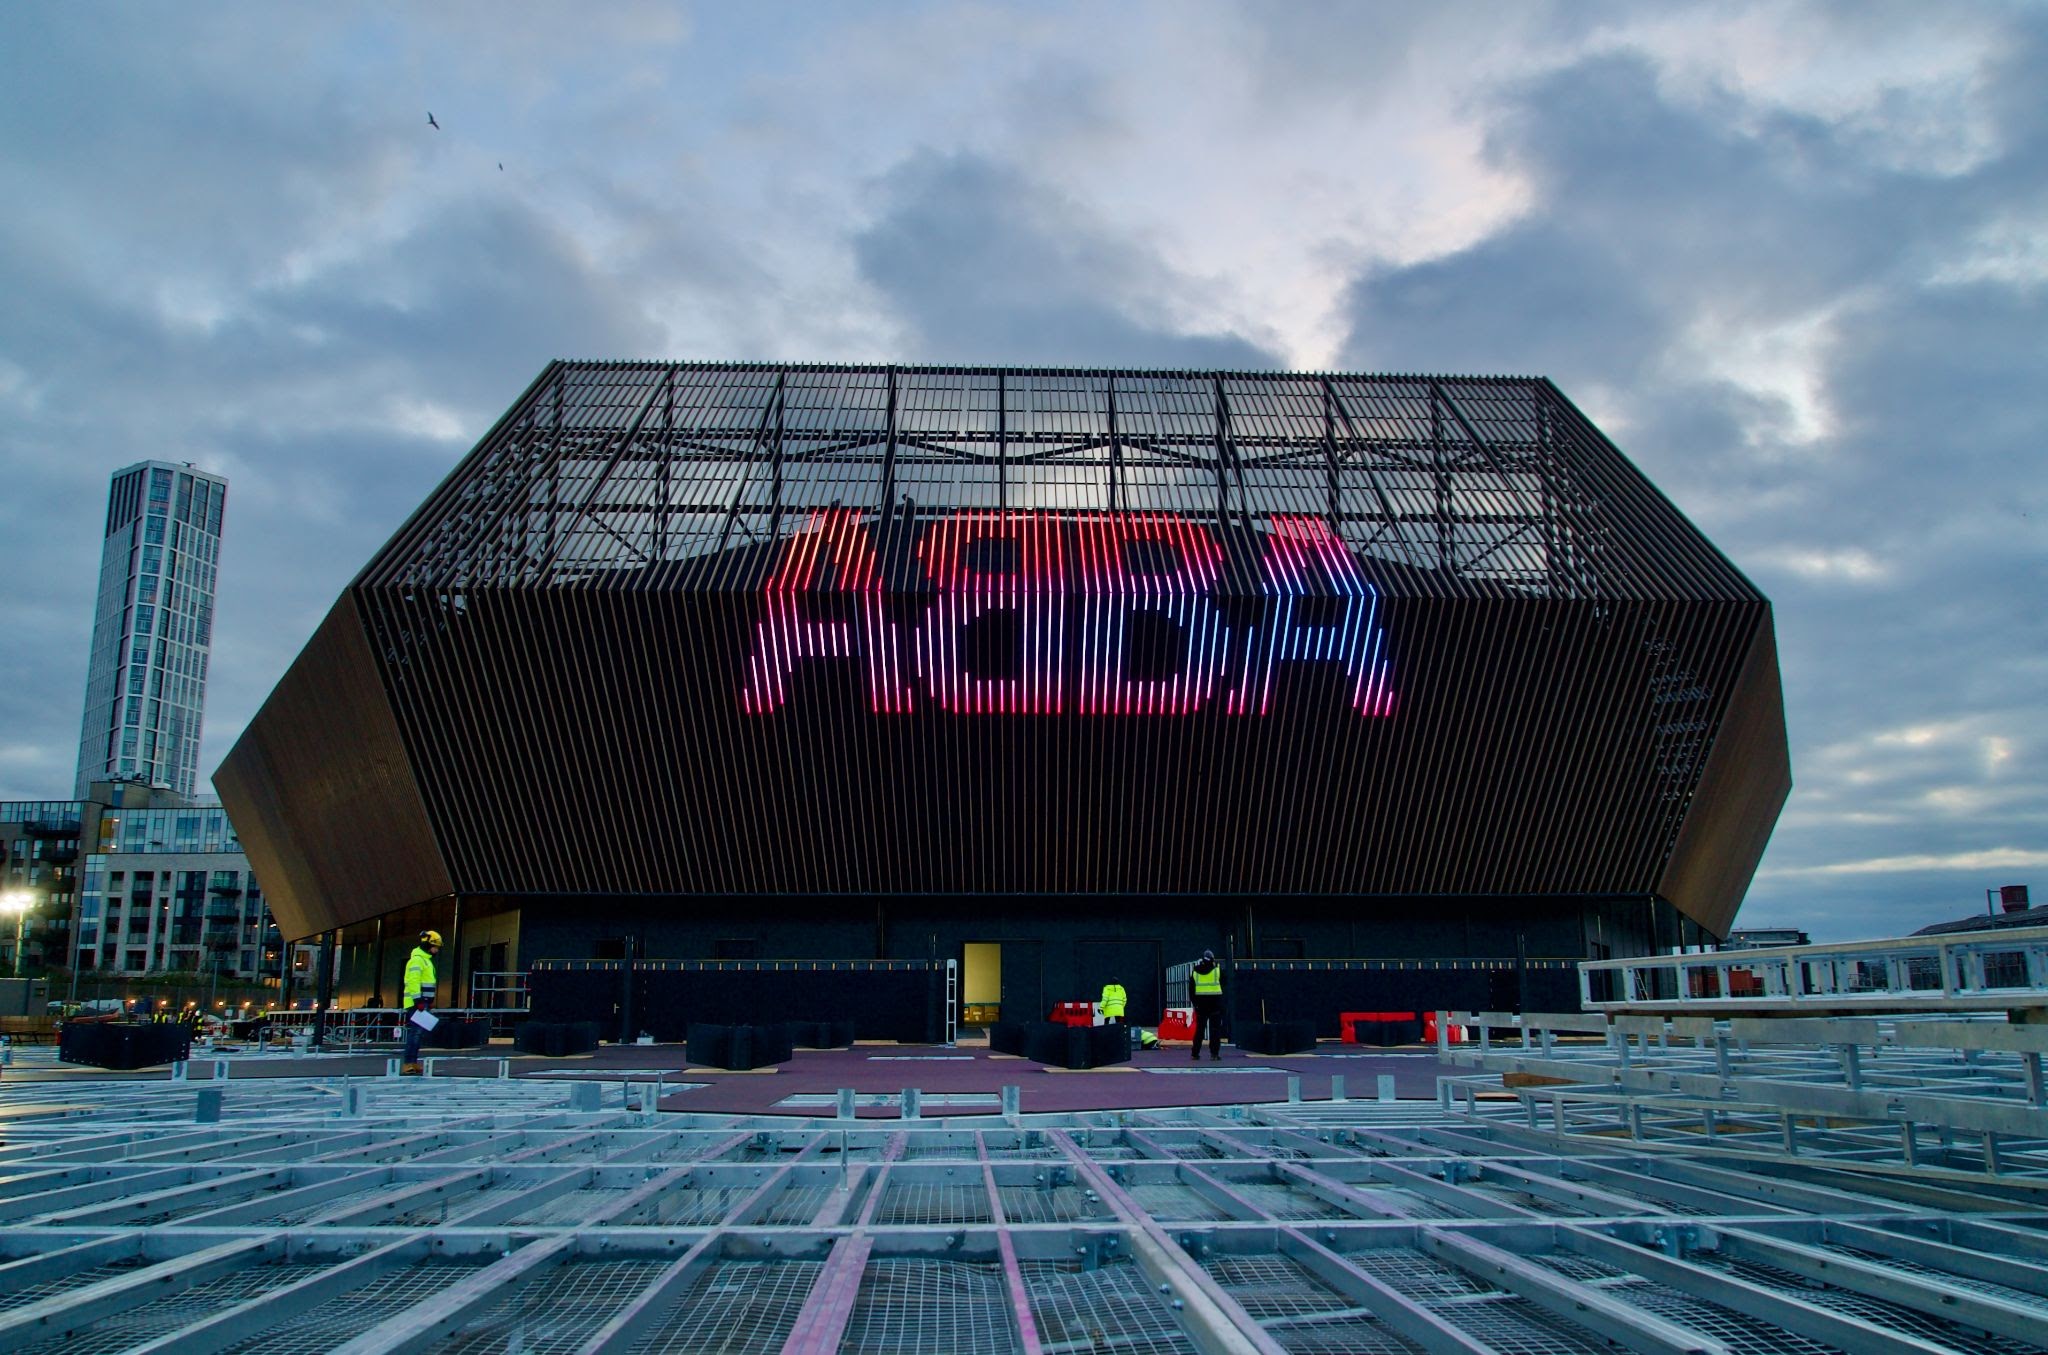 ABBA Arena